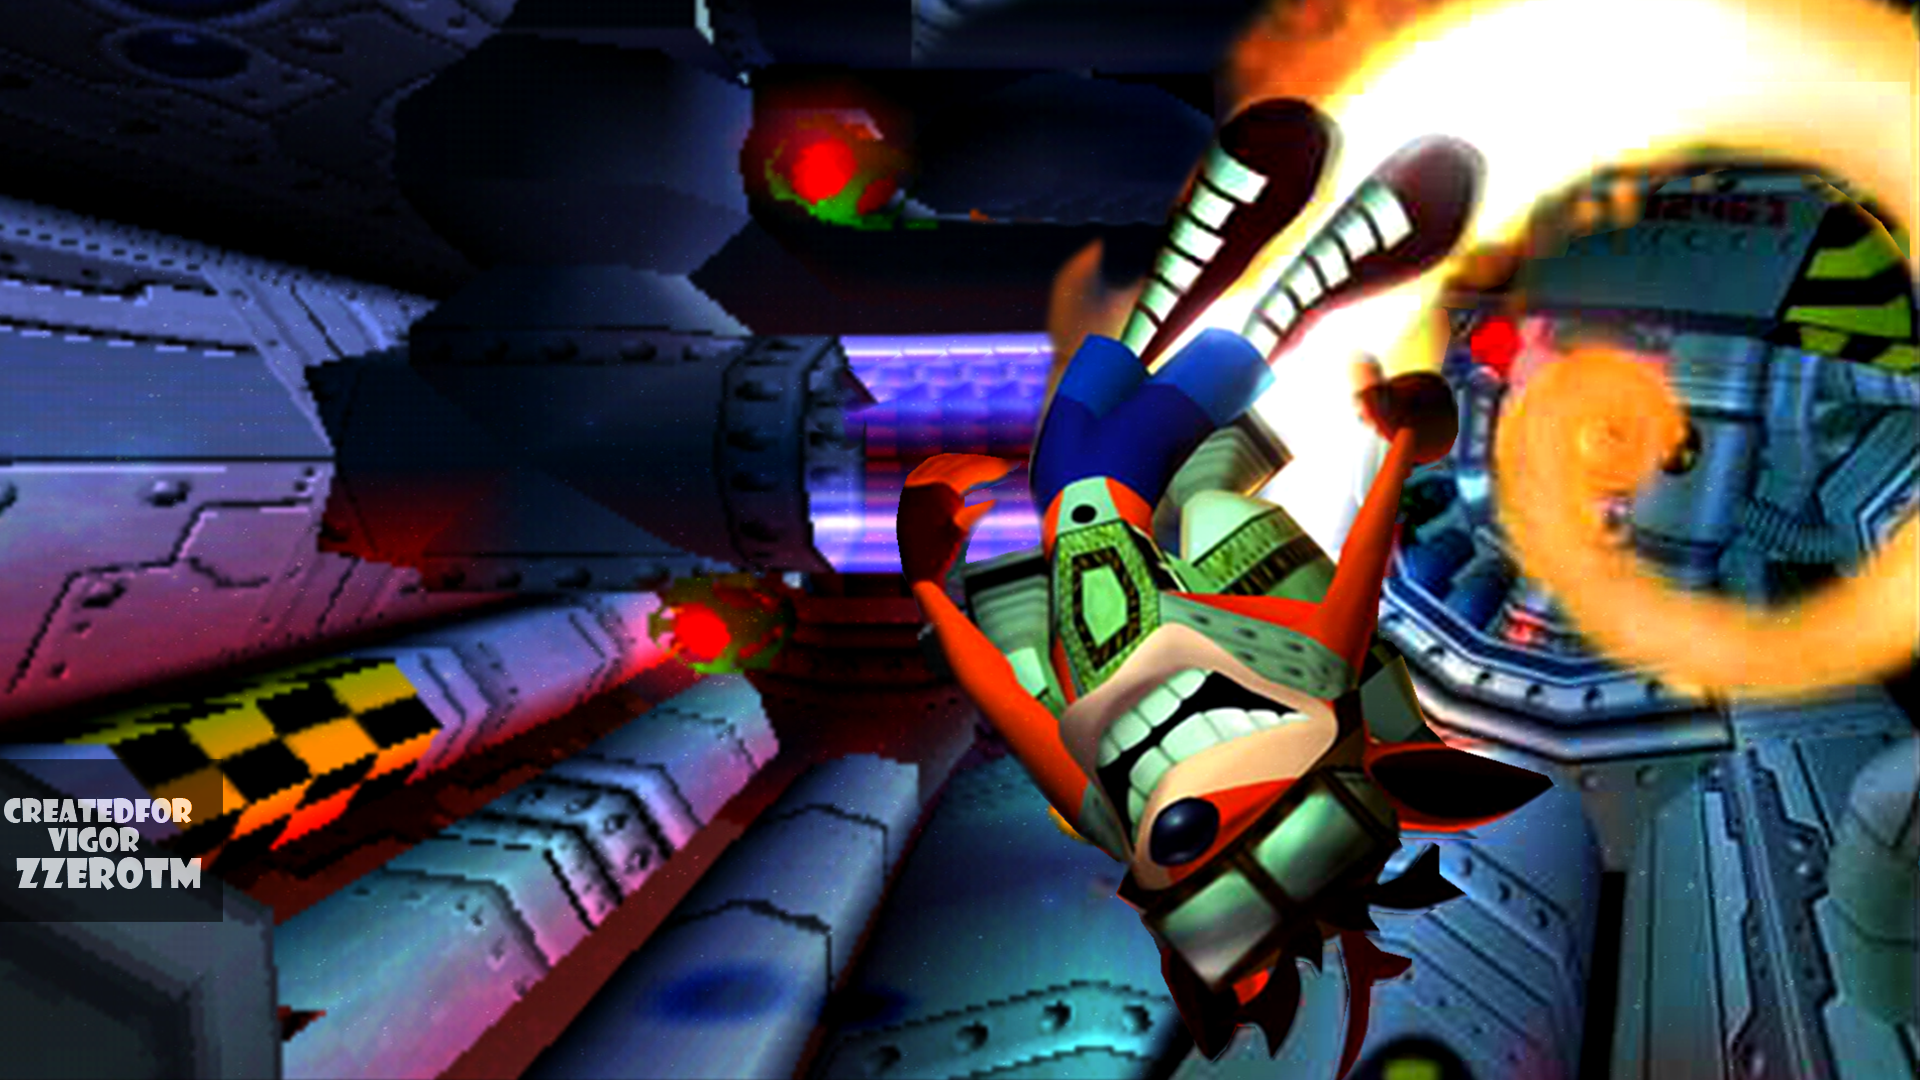 Crash Bandicoot 2: Cortex Strikes Back Picture by vigorzzerotm